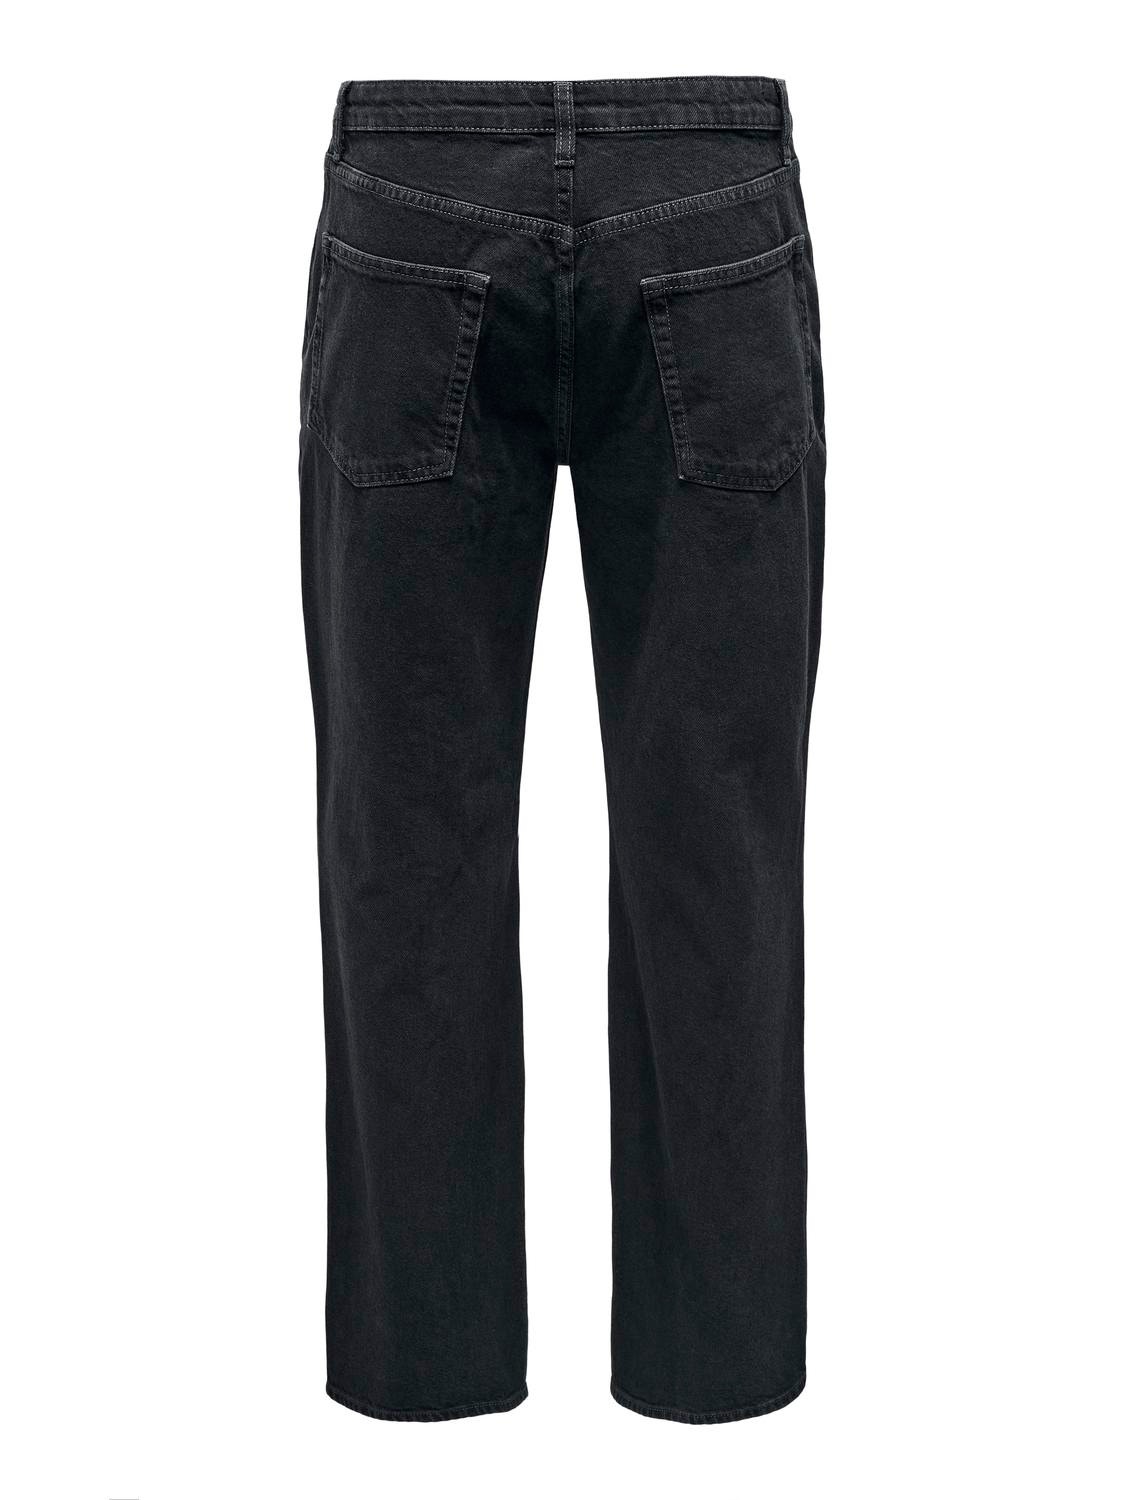 ONLY & SONS Locker geschnitten Jeans -Washed Black - 22026778